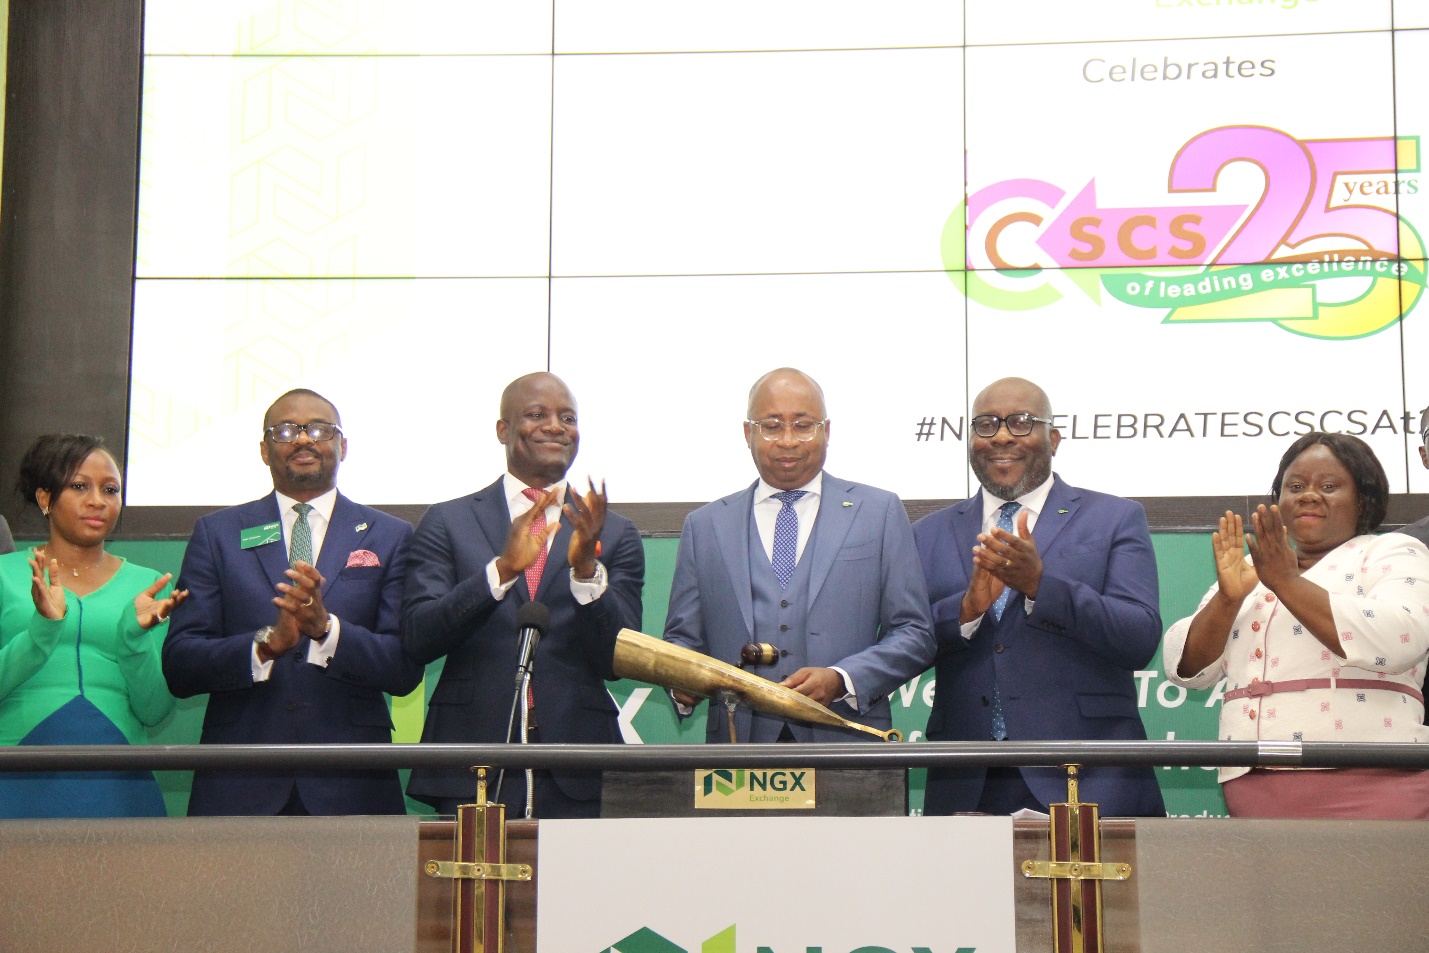 CSCS’ 25th Anniversary Celebration in Lagos